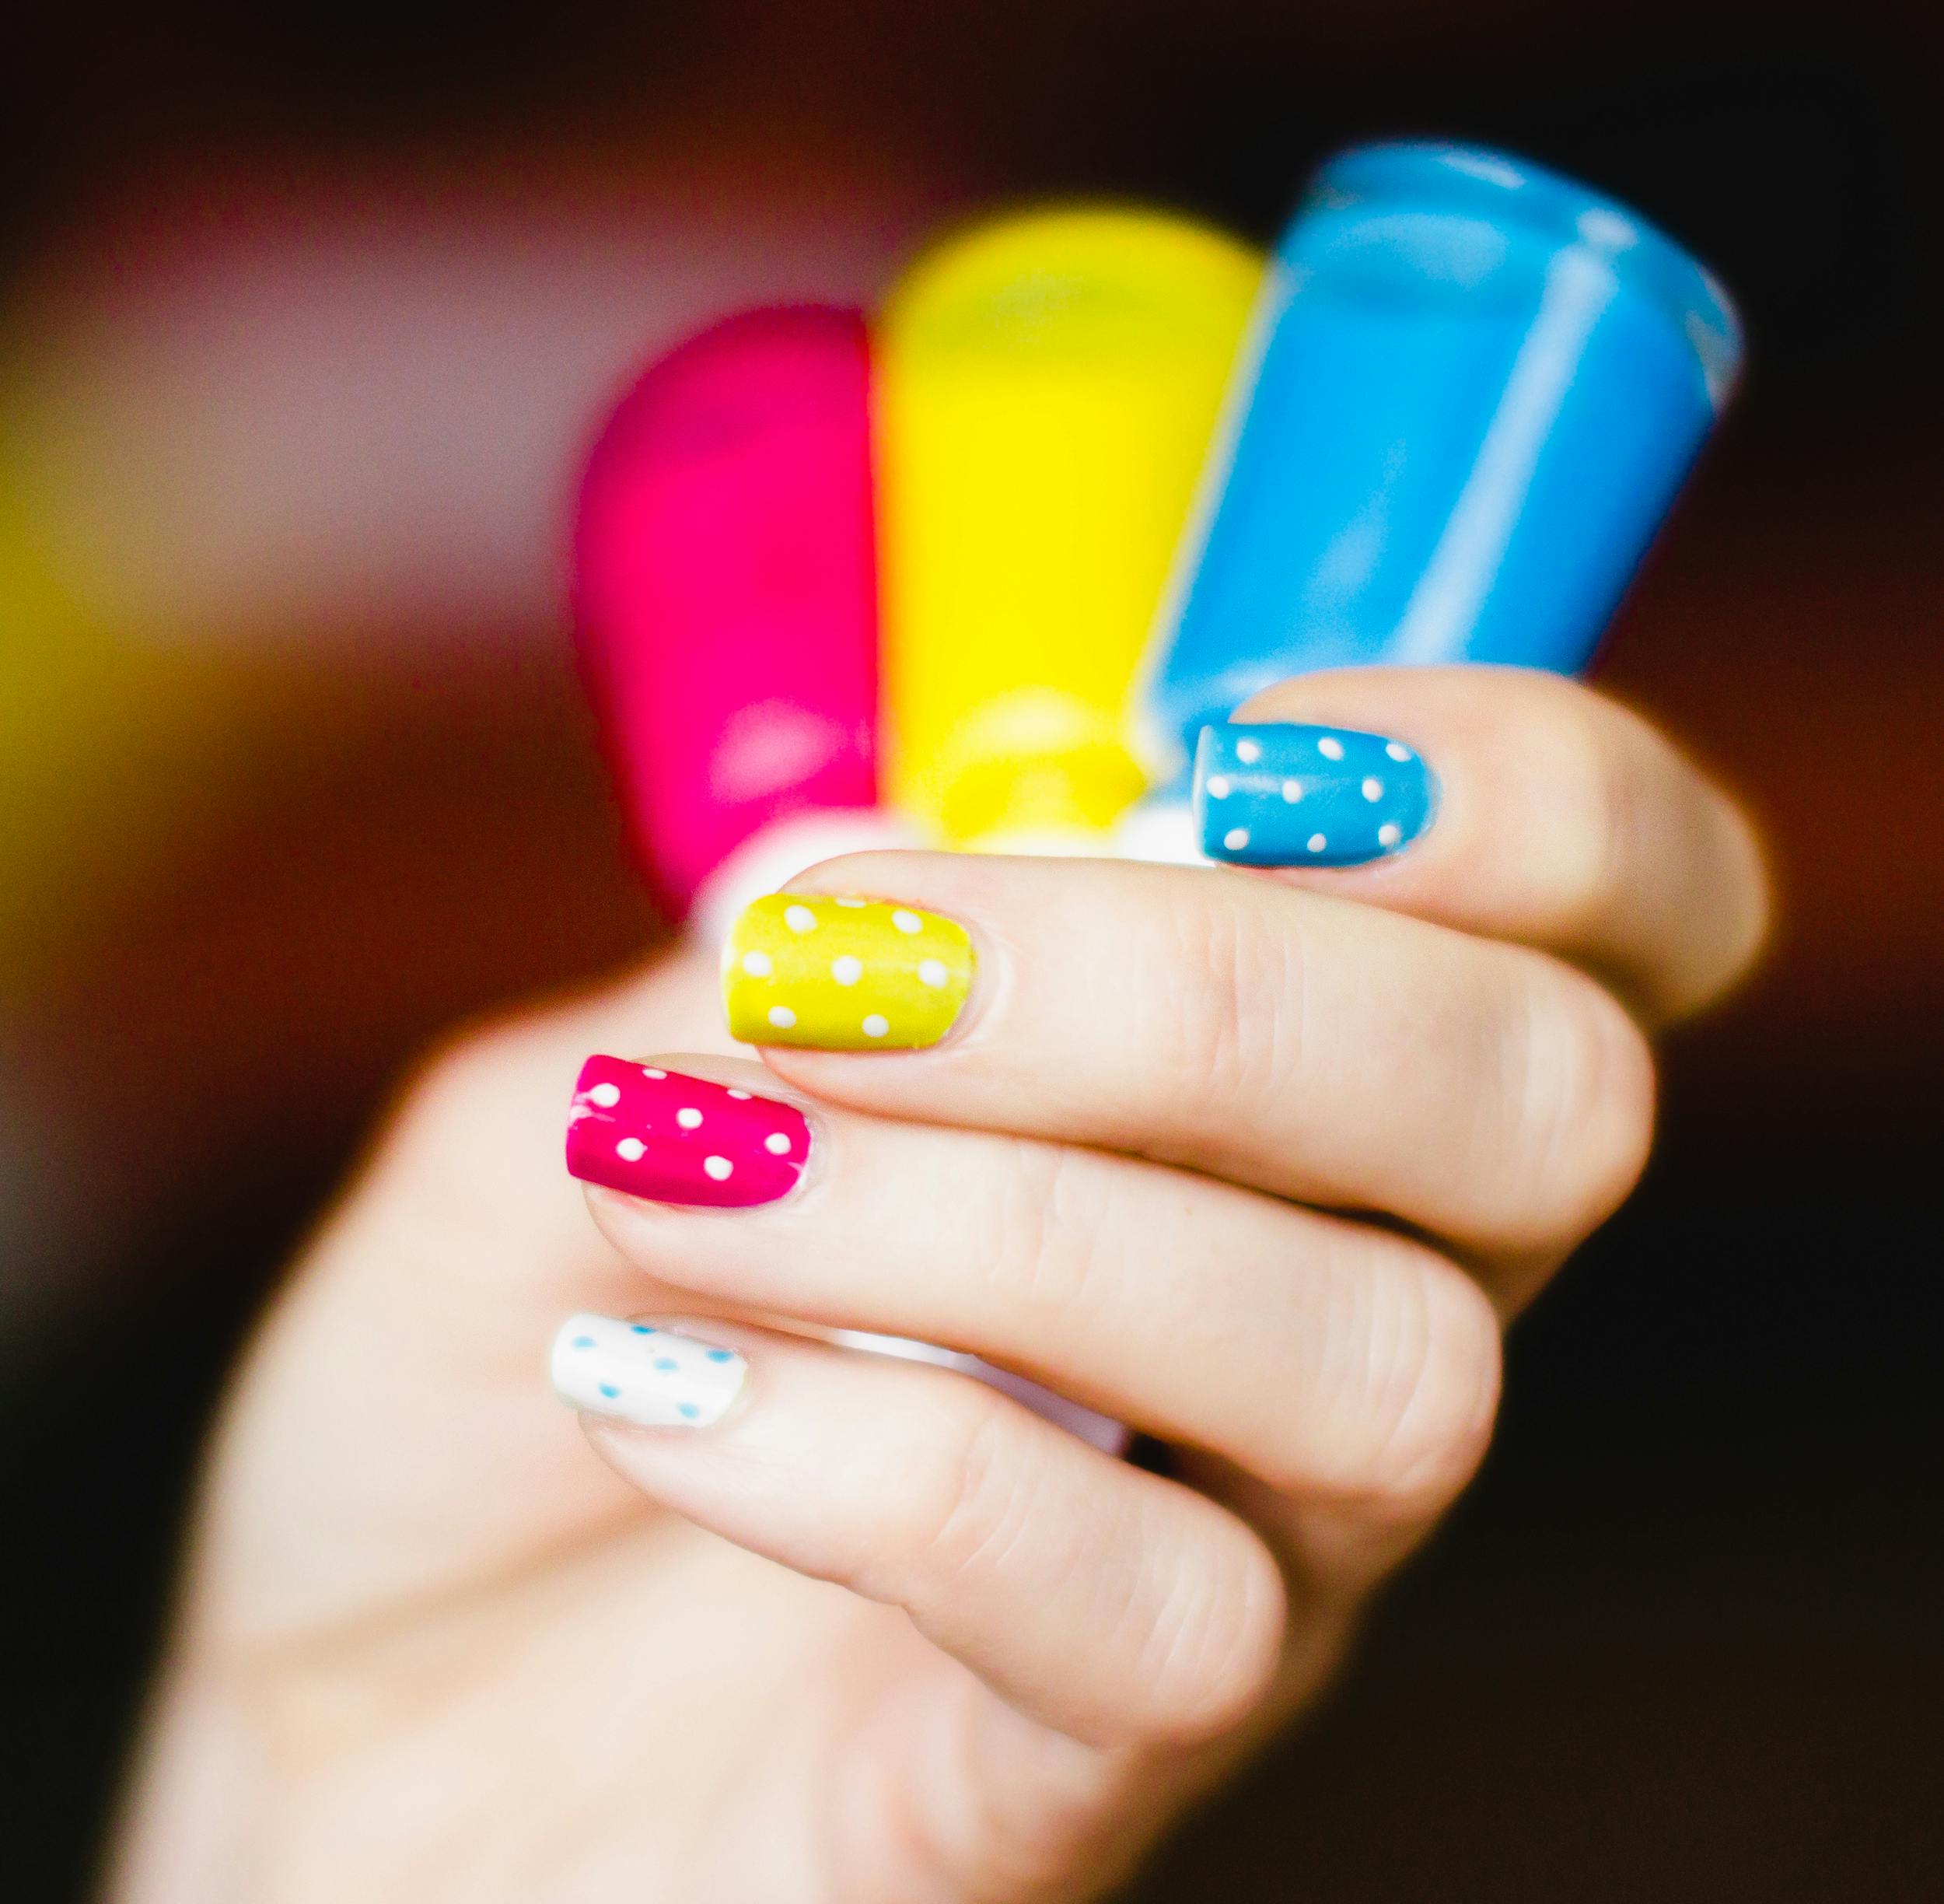 Beauty tips nail care image 2: hands with nail polish · free stock photo